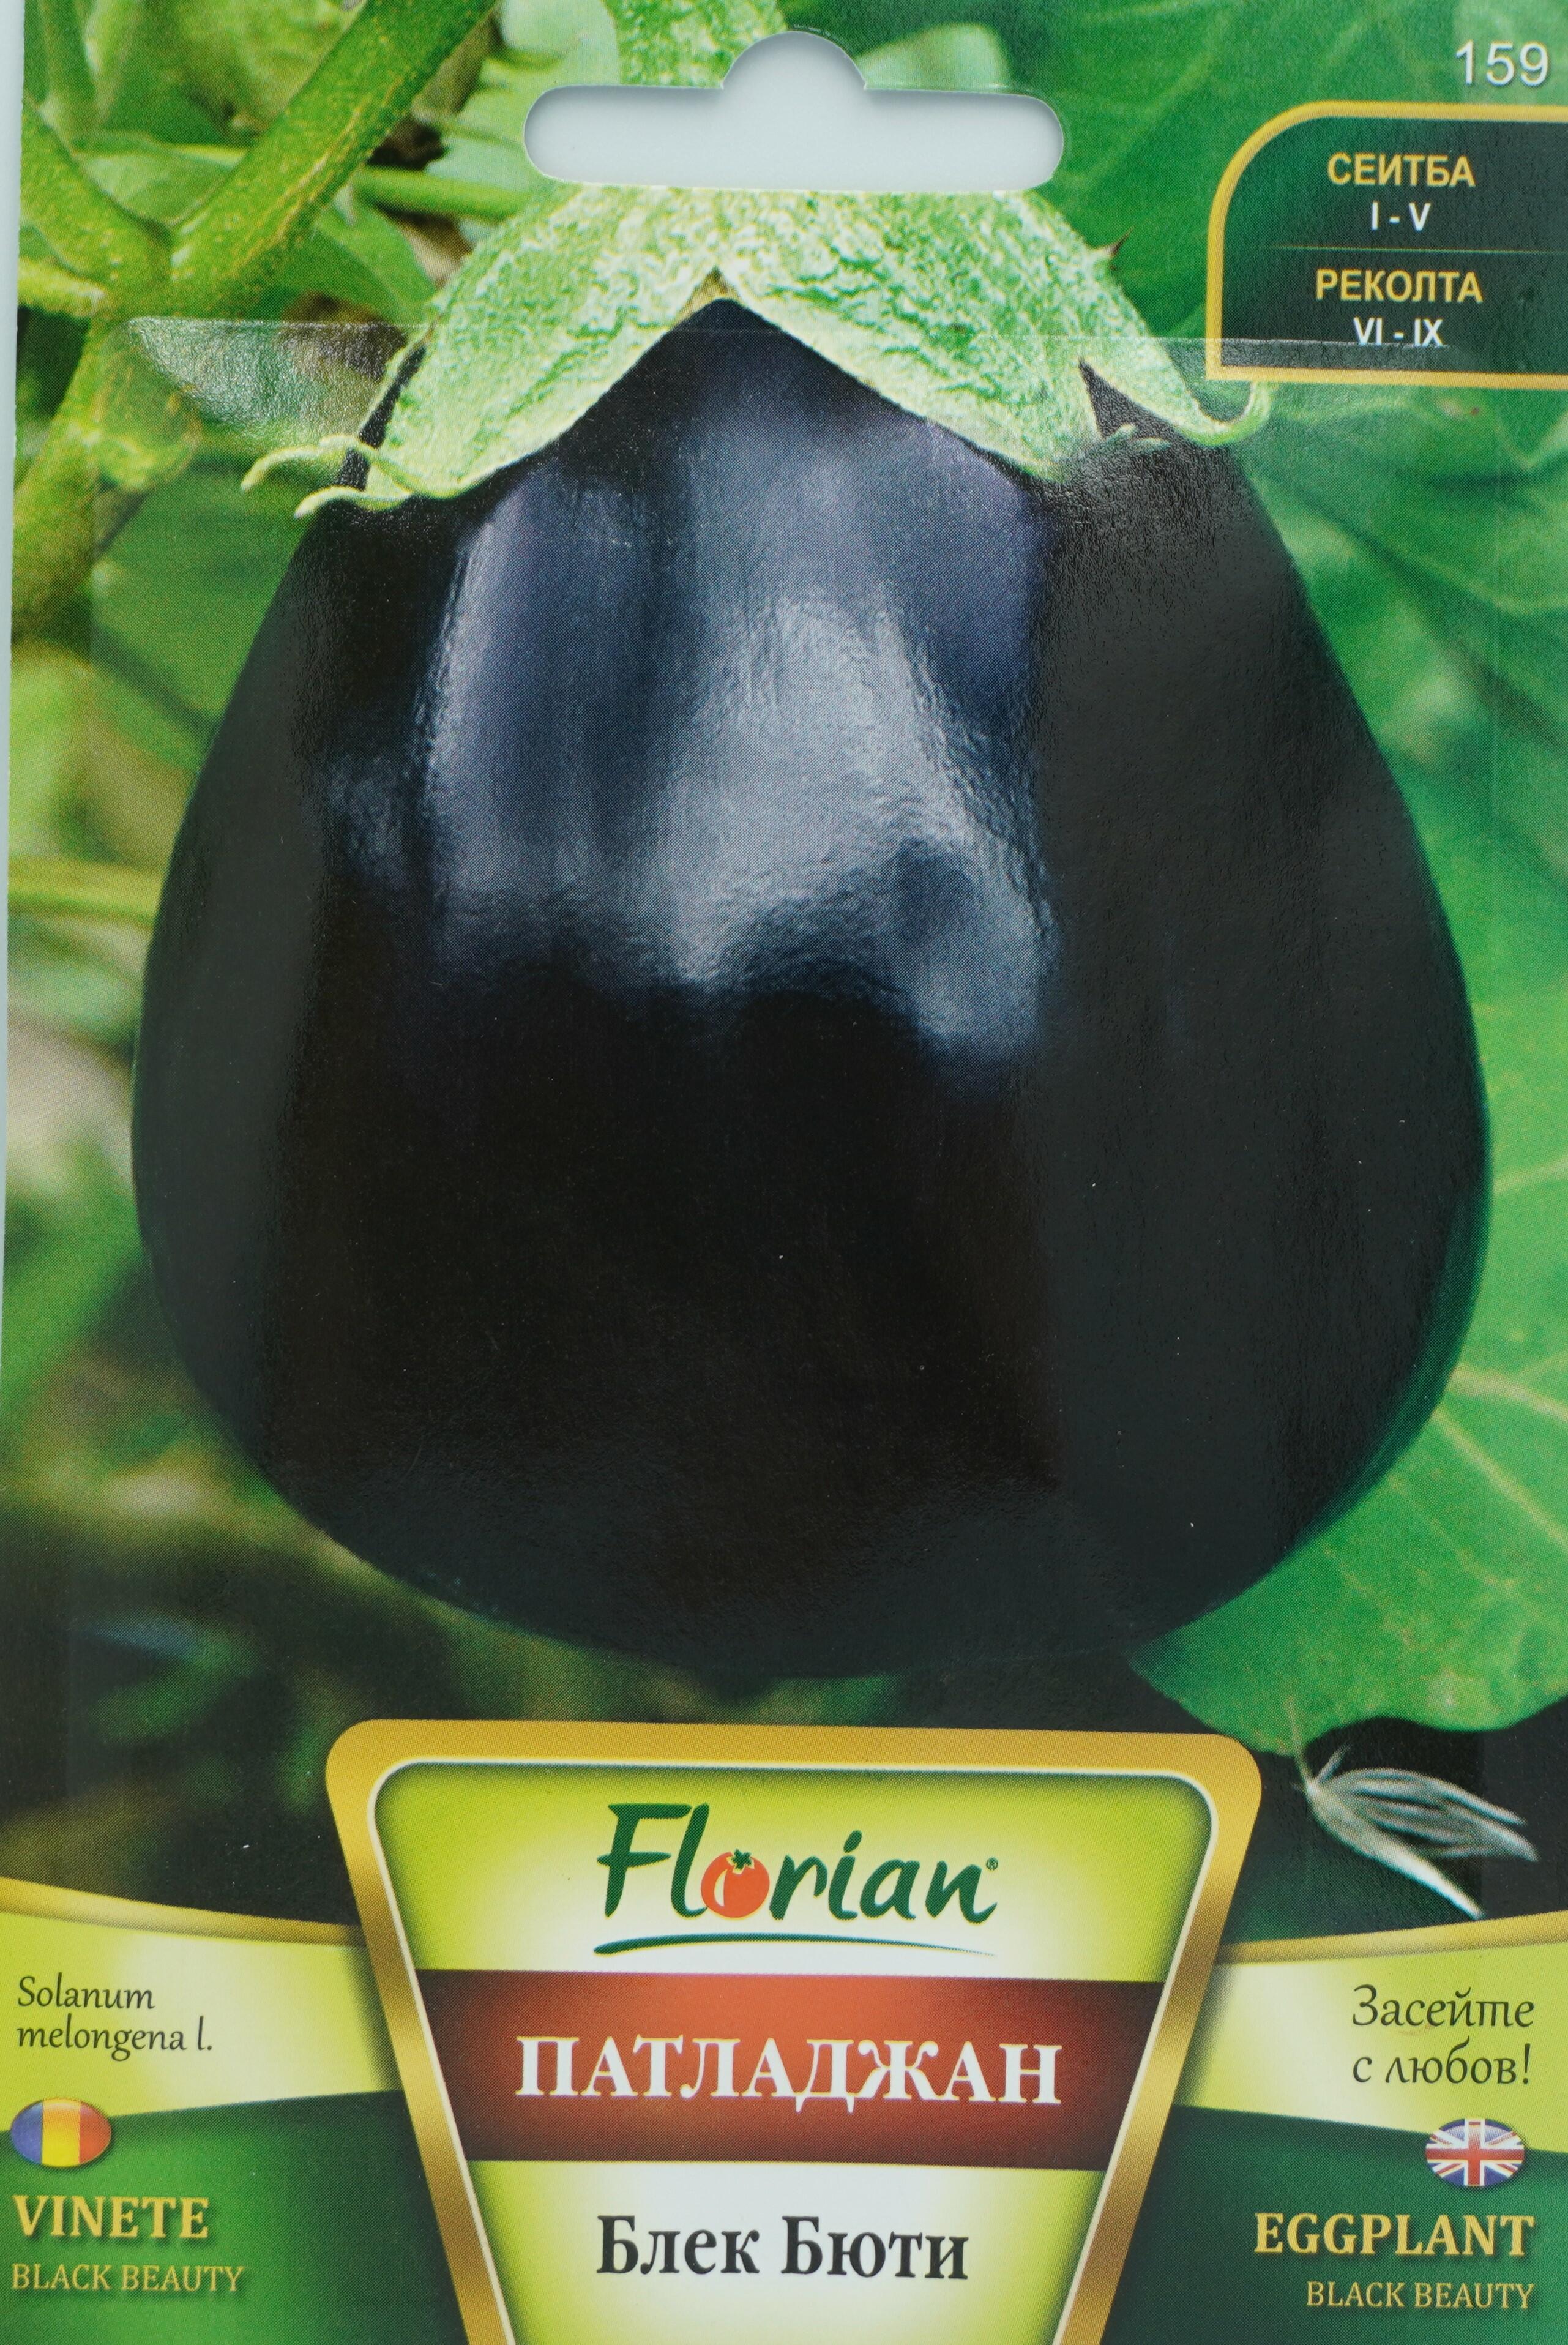 Seminte vinete Black Beauty 1.5g Florian 159